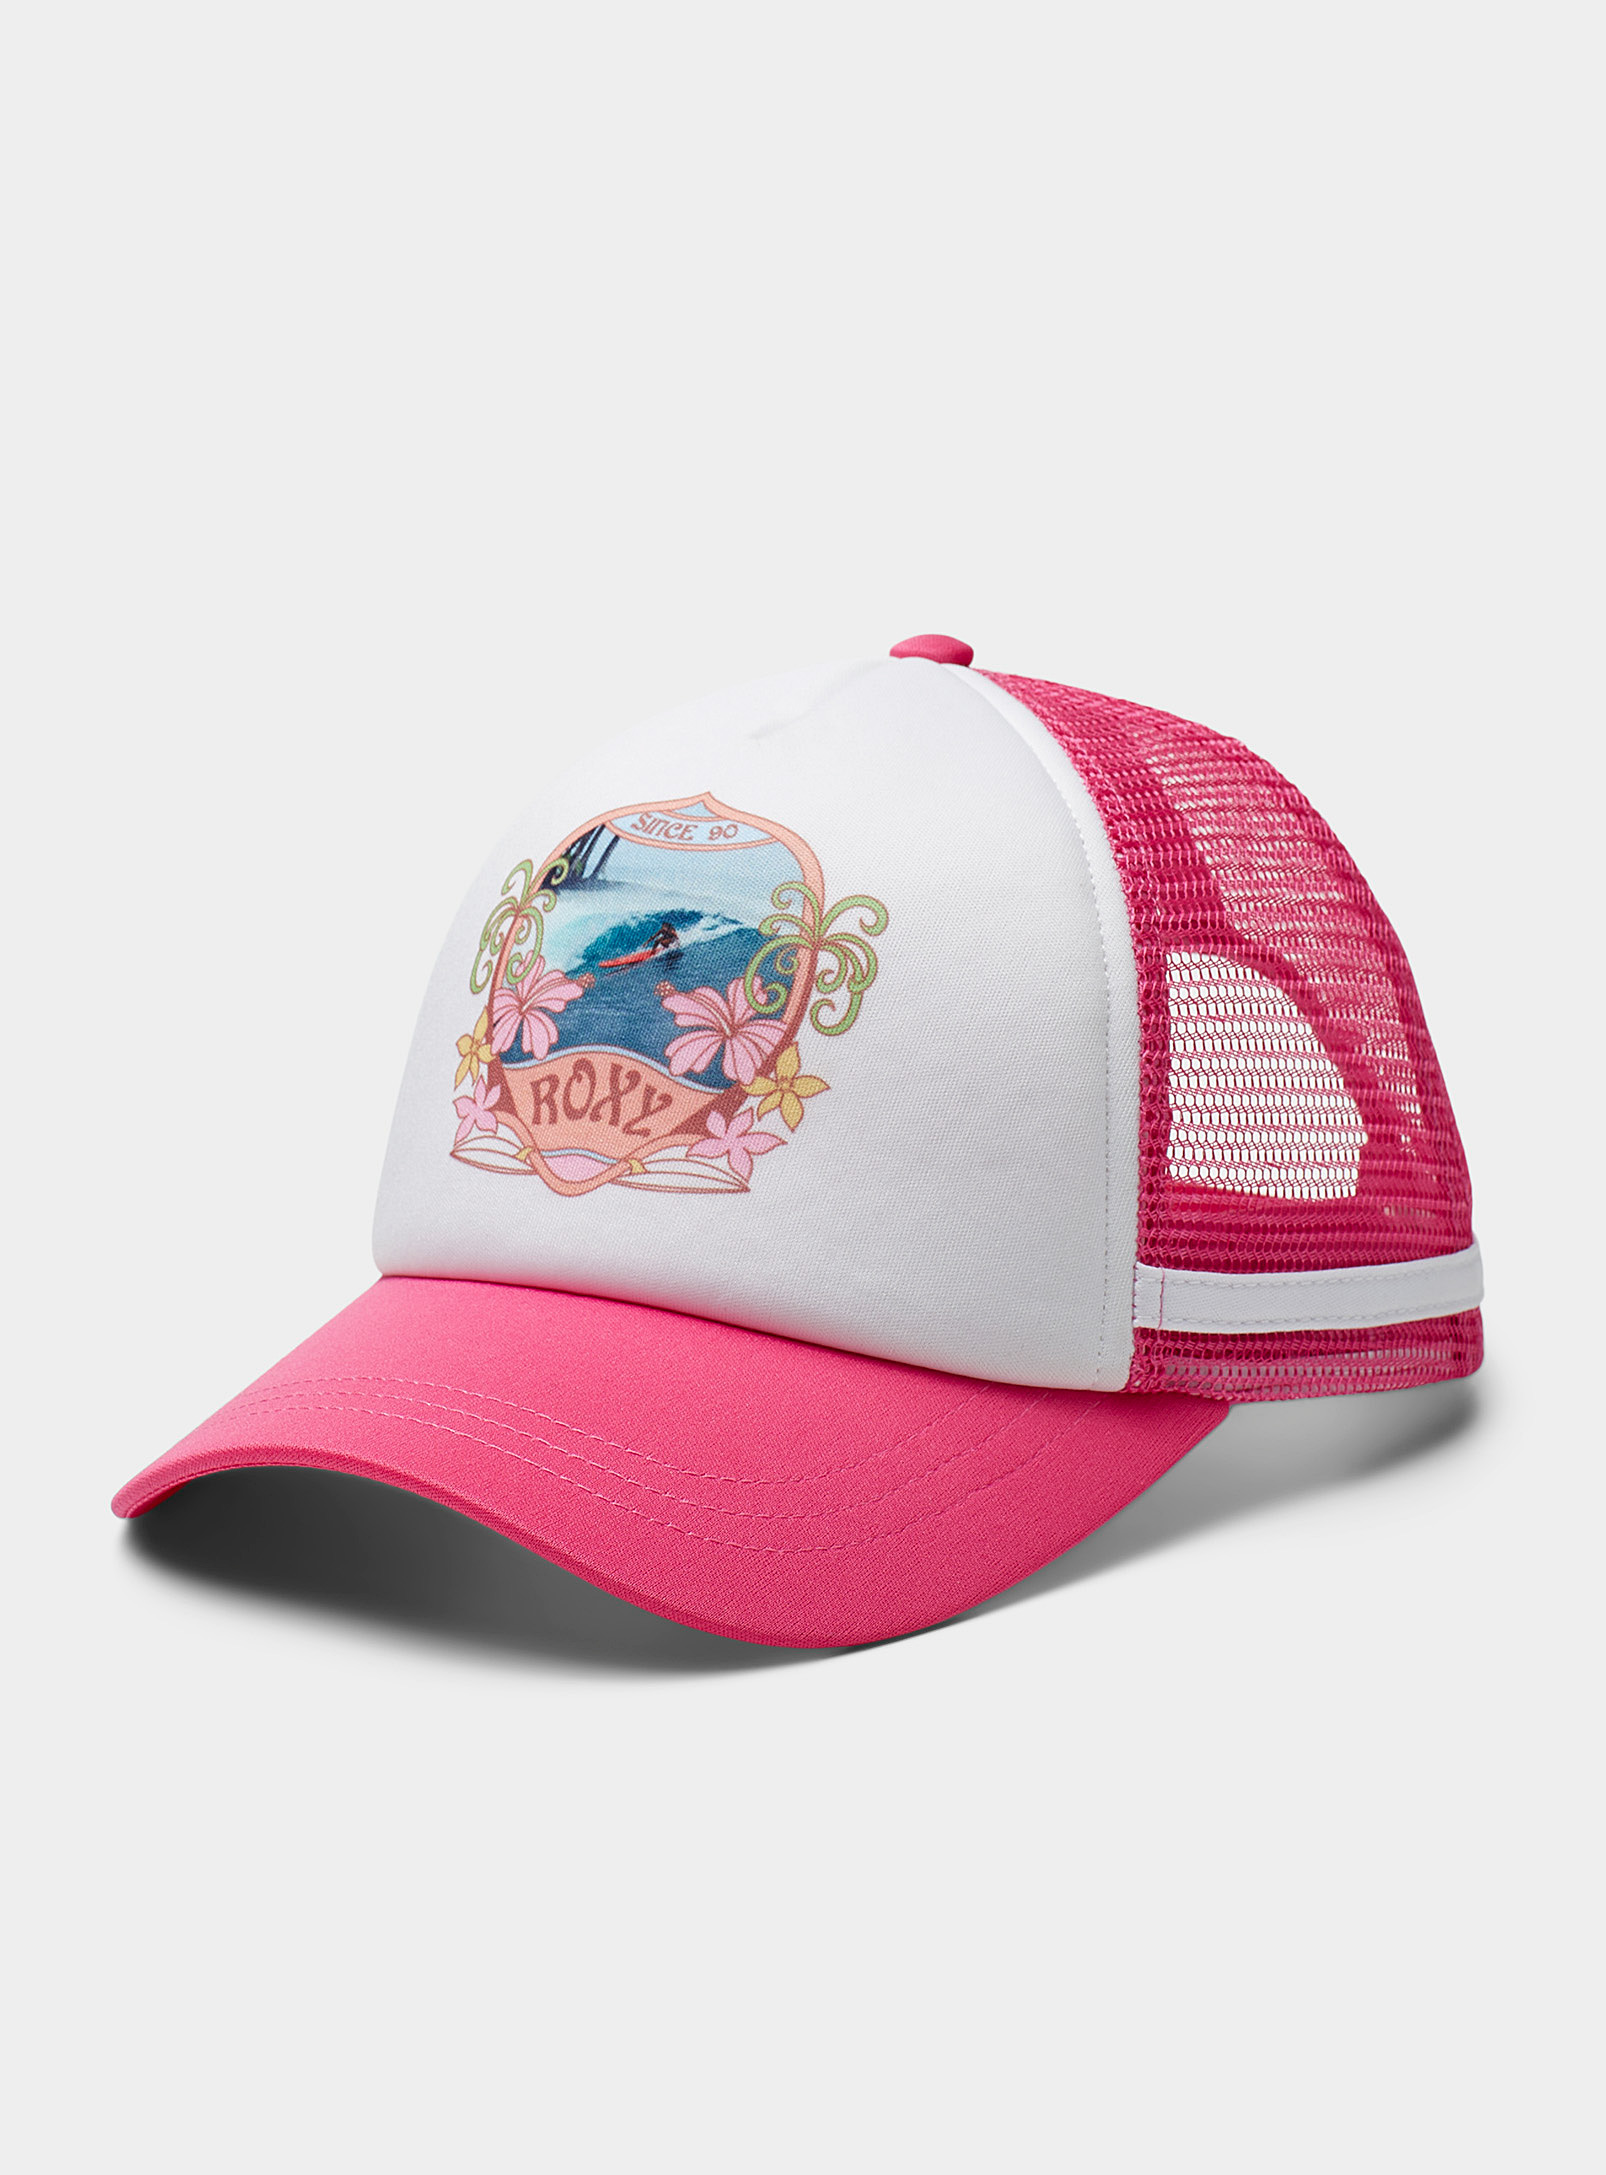 Roxy - Women's Tropical paradise trucker cap